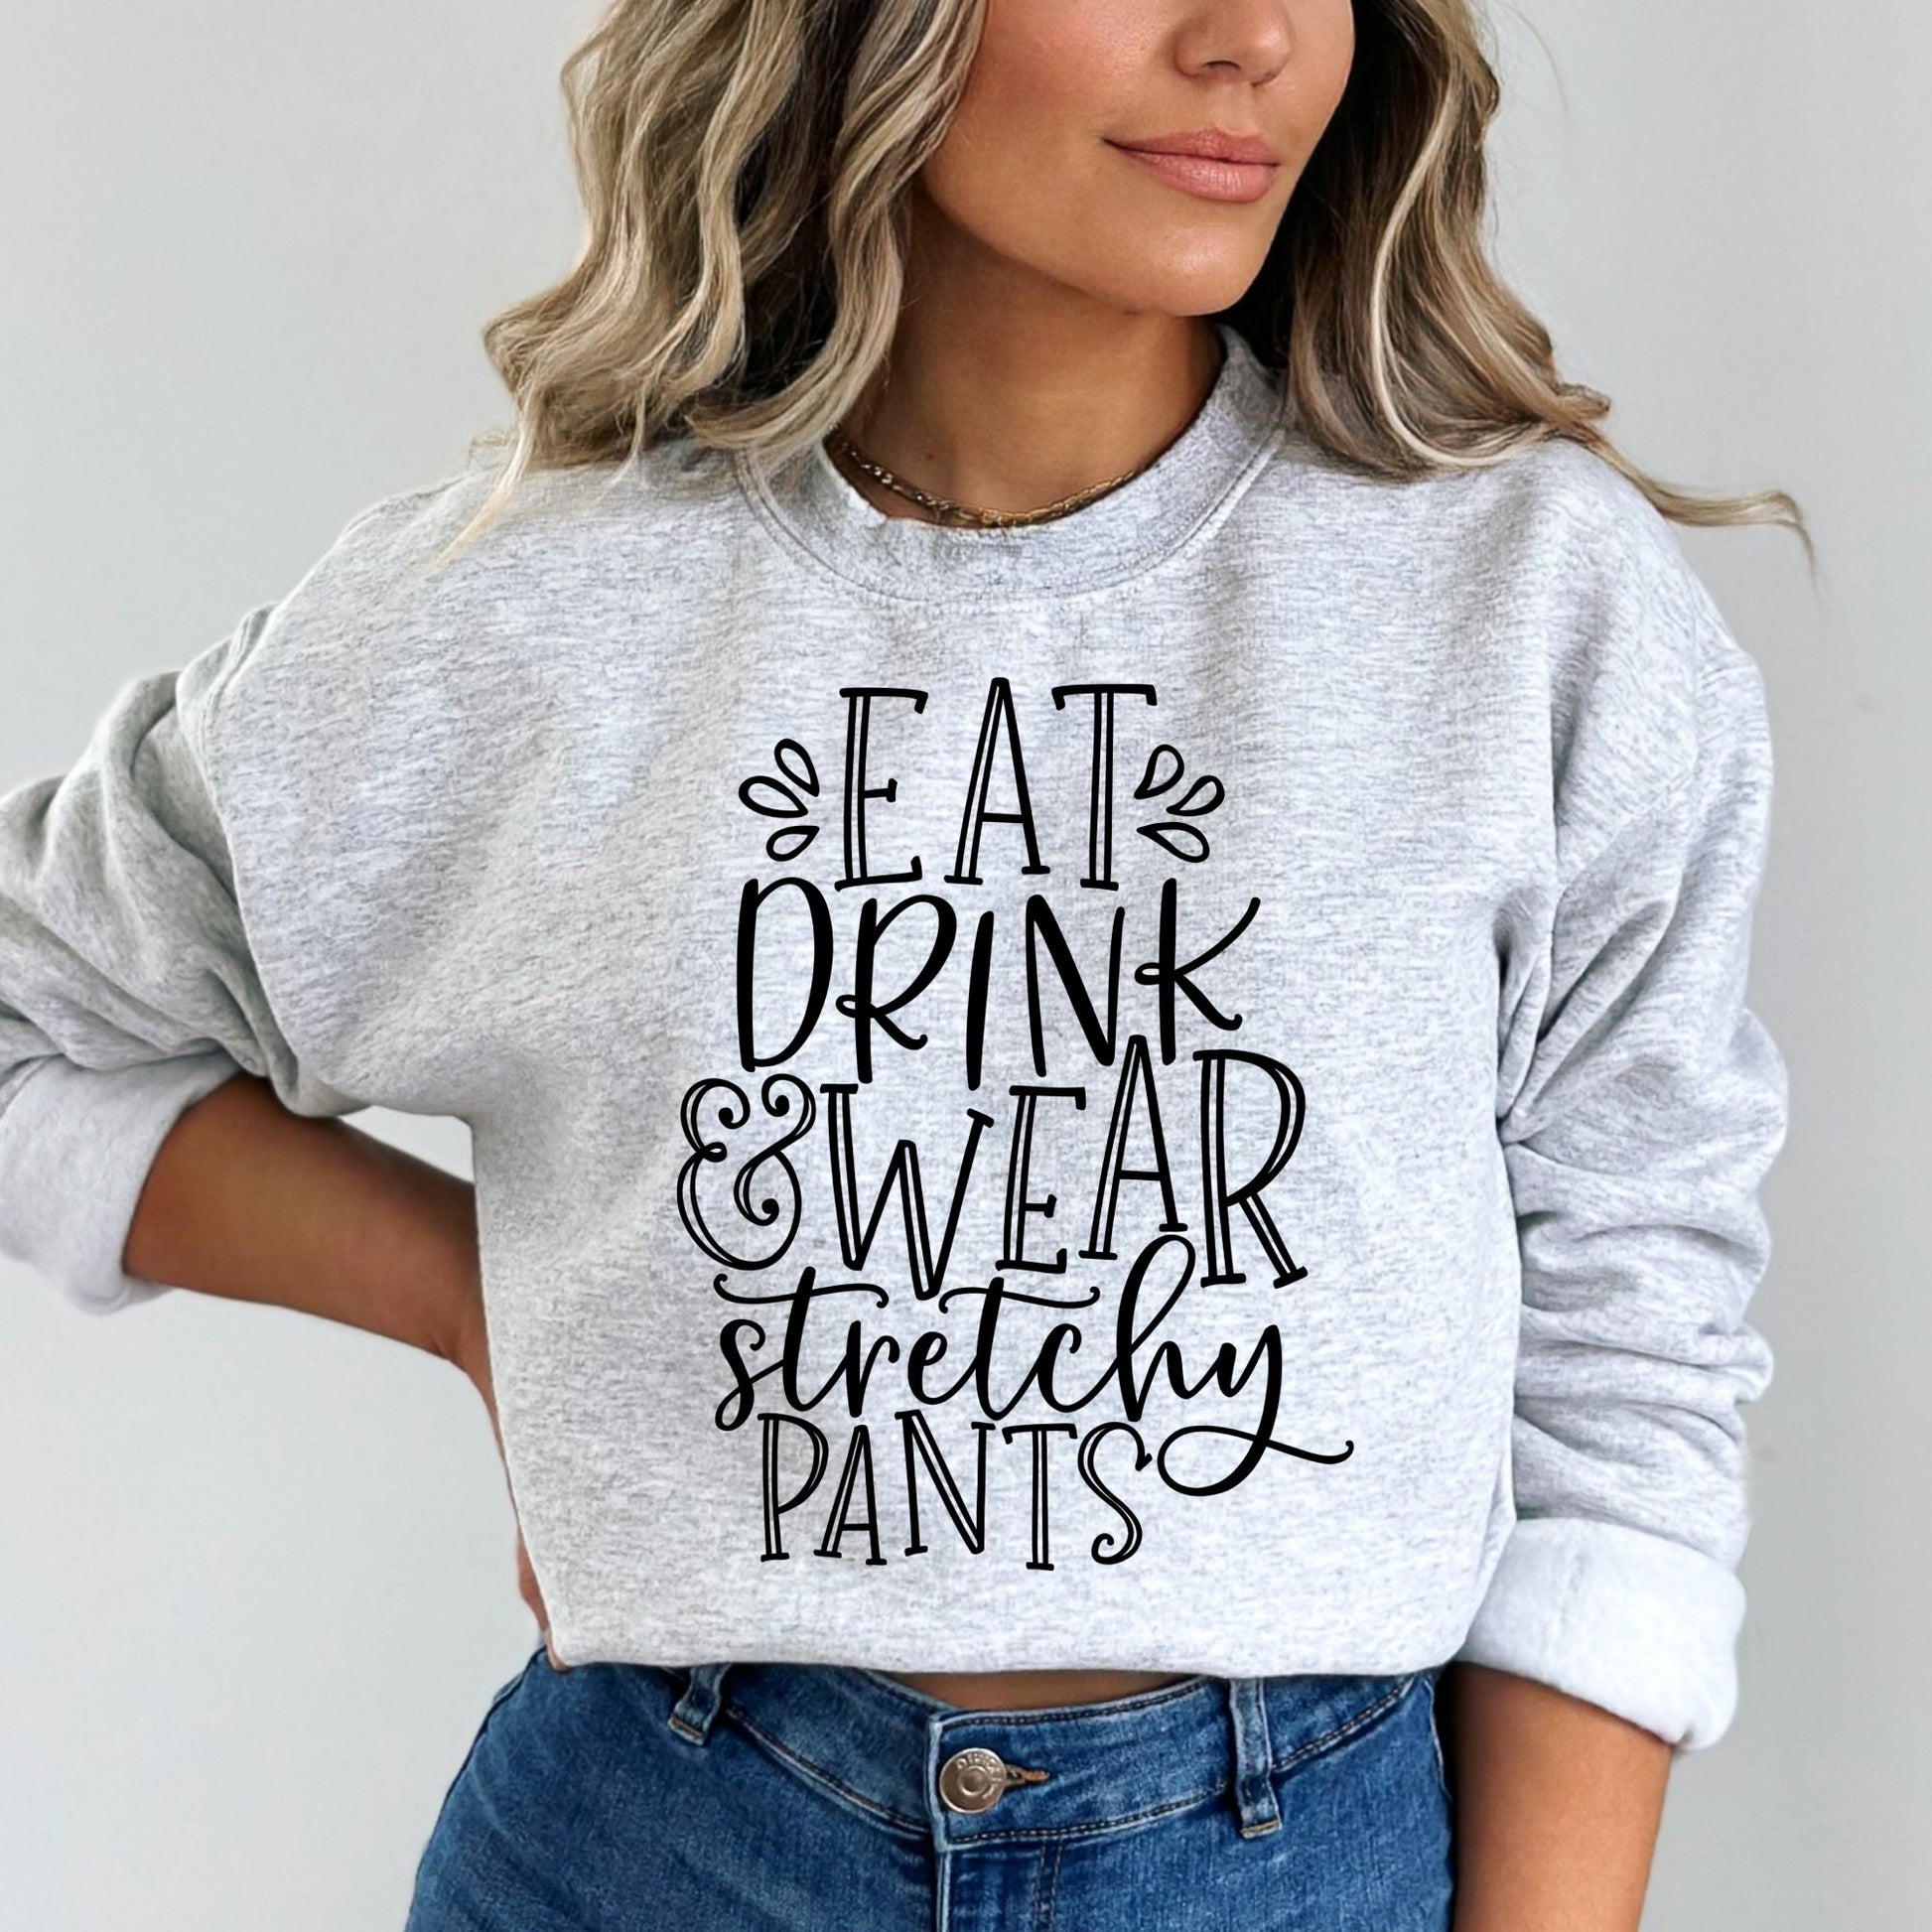 Eat Drink & Wear Stretchy Pants Thanksgiving Sweatshirt, Cute Thanksgiving Shirt, Fall Clothing, Thankful Family Shirts - Mardonyx Sweatshirt S / Ash